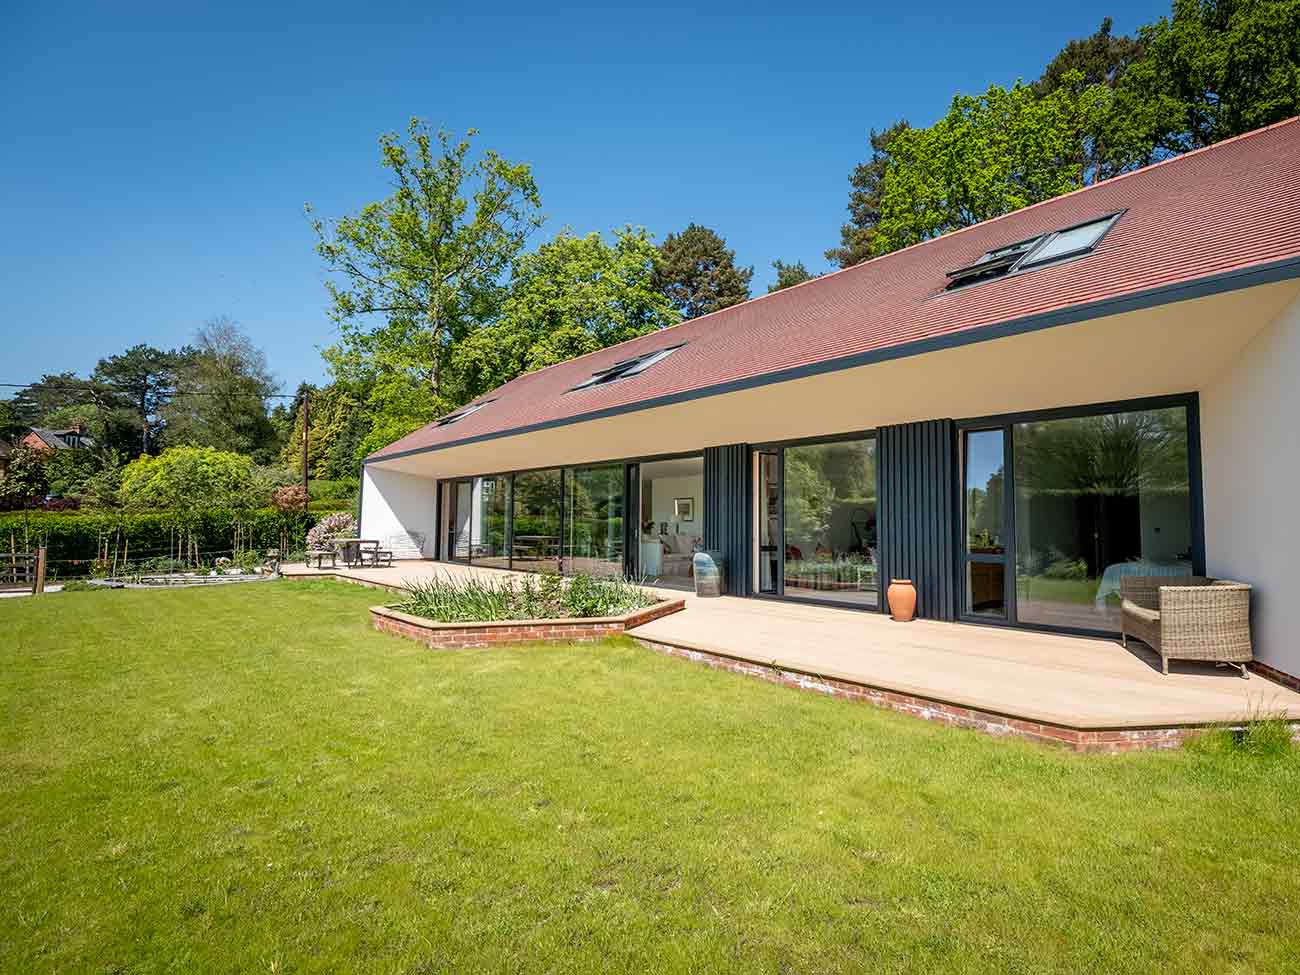 Sustainable Passivhaus designed home